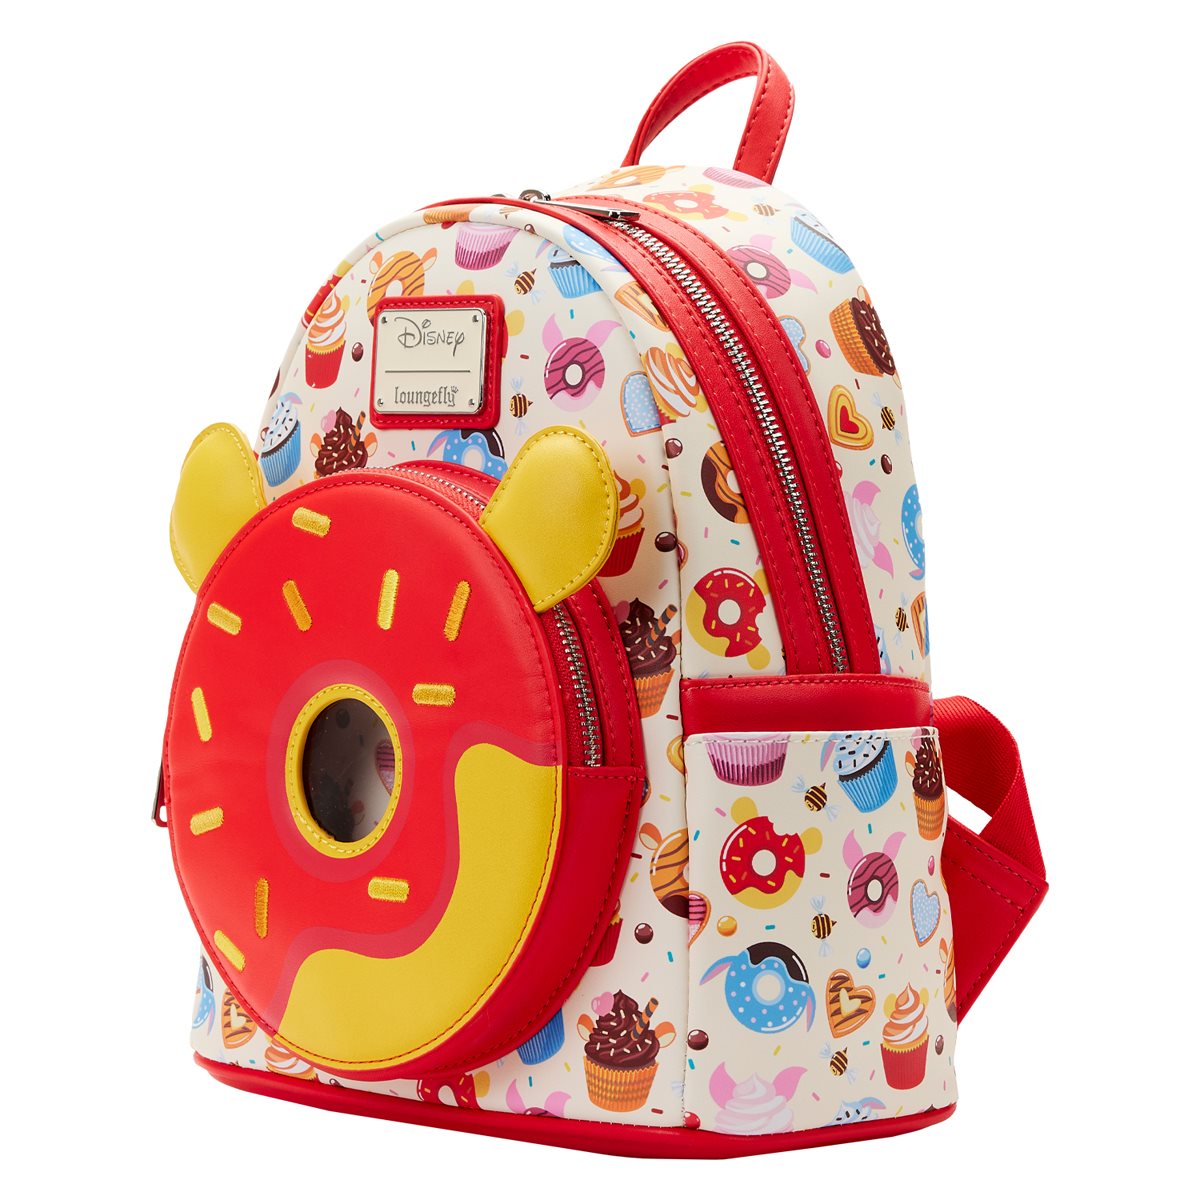 Winnie the Pooh Sweets Poohnut Pocket Mini-Backpack